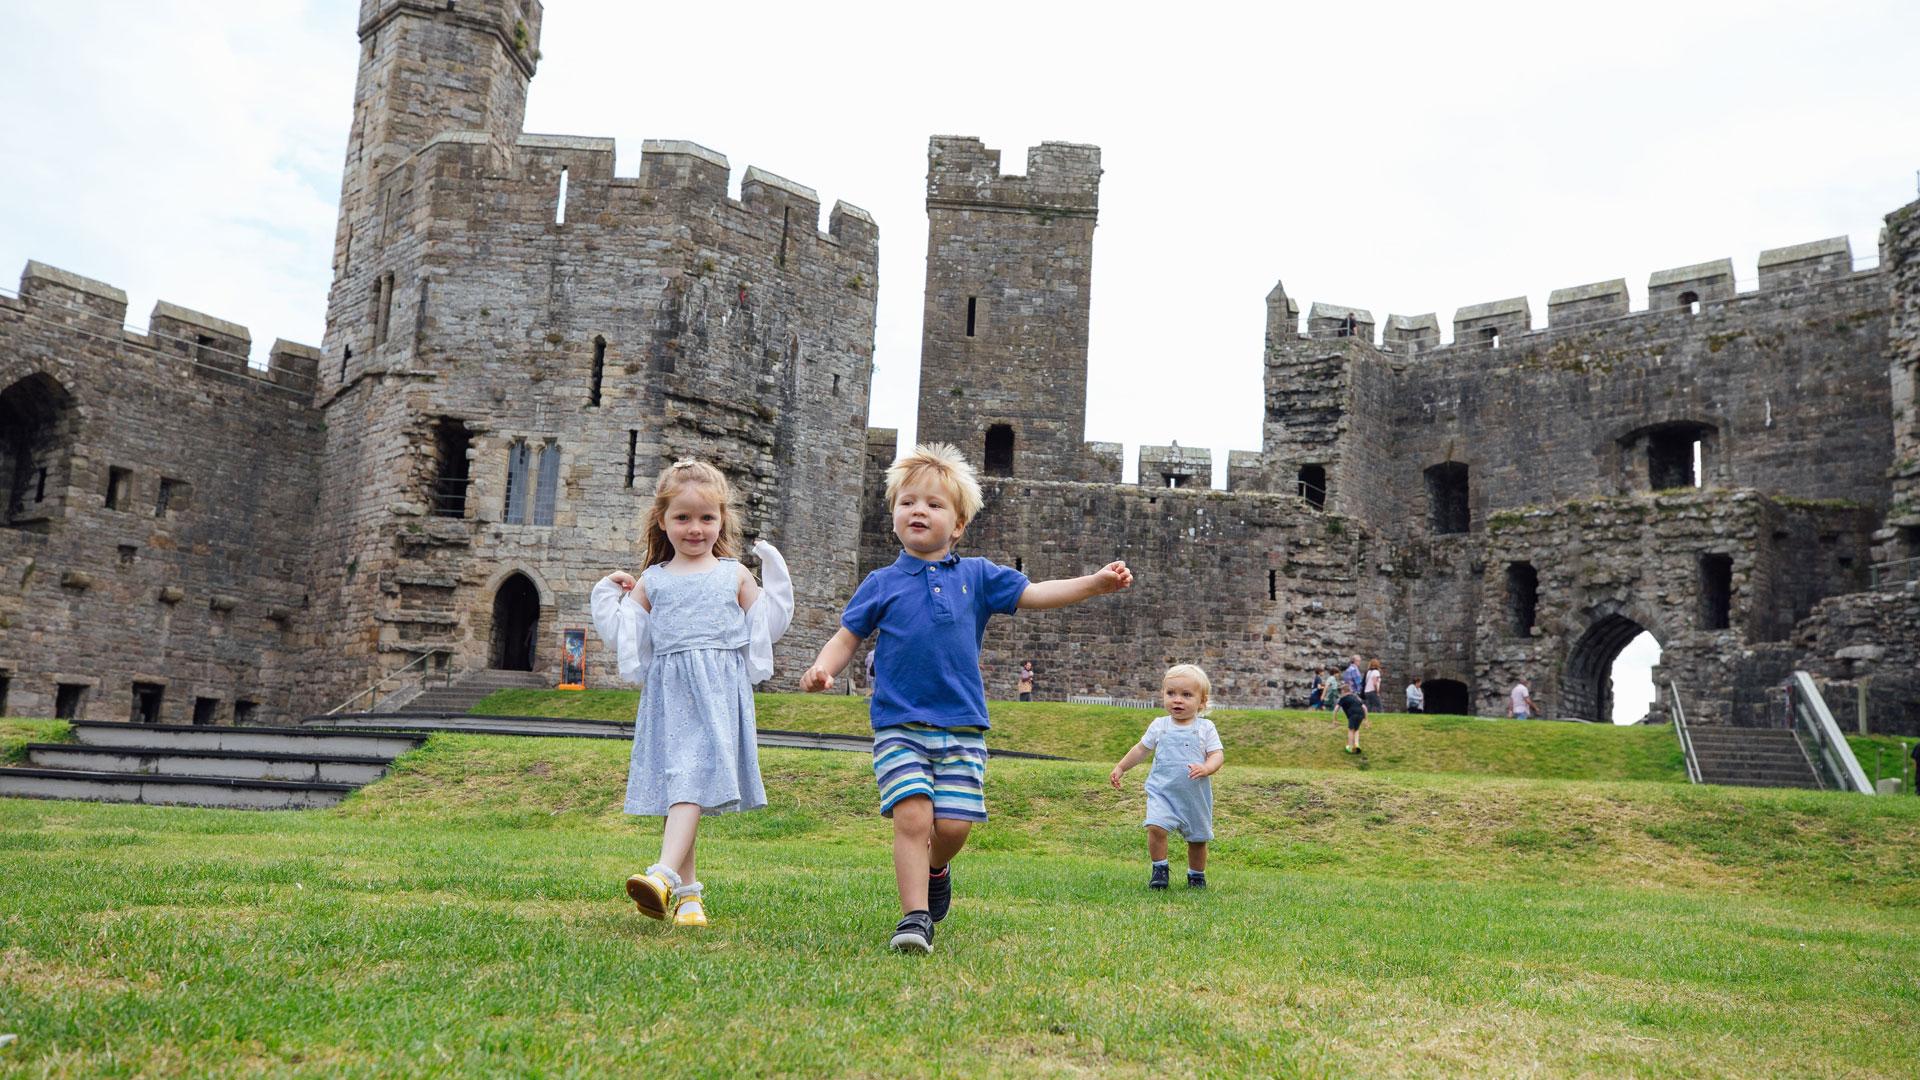 Castell Caernarfon / Caernarfon Castle interior - children running across grass